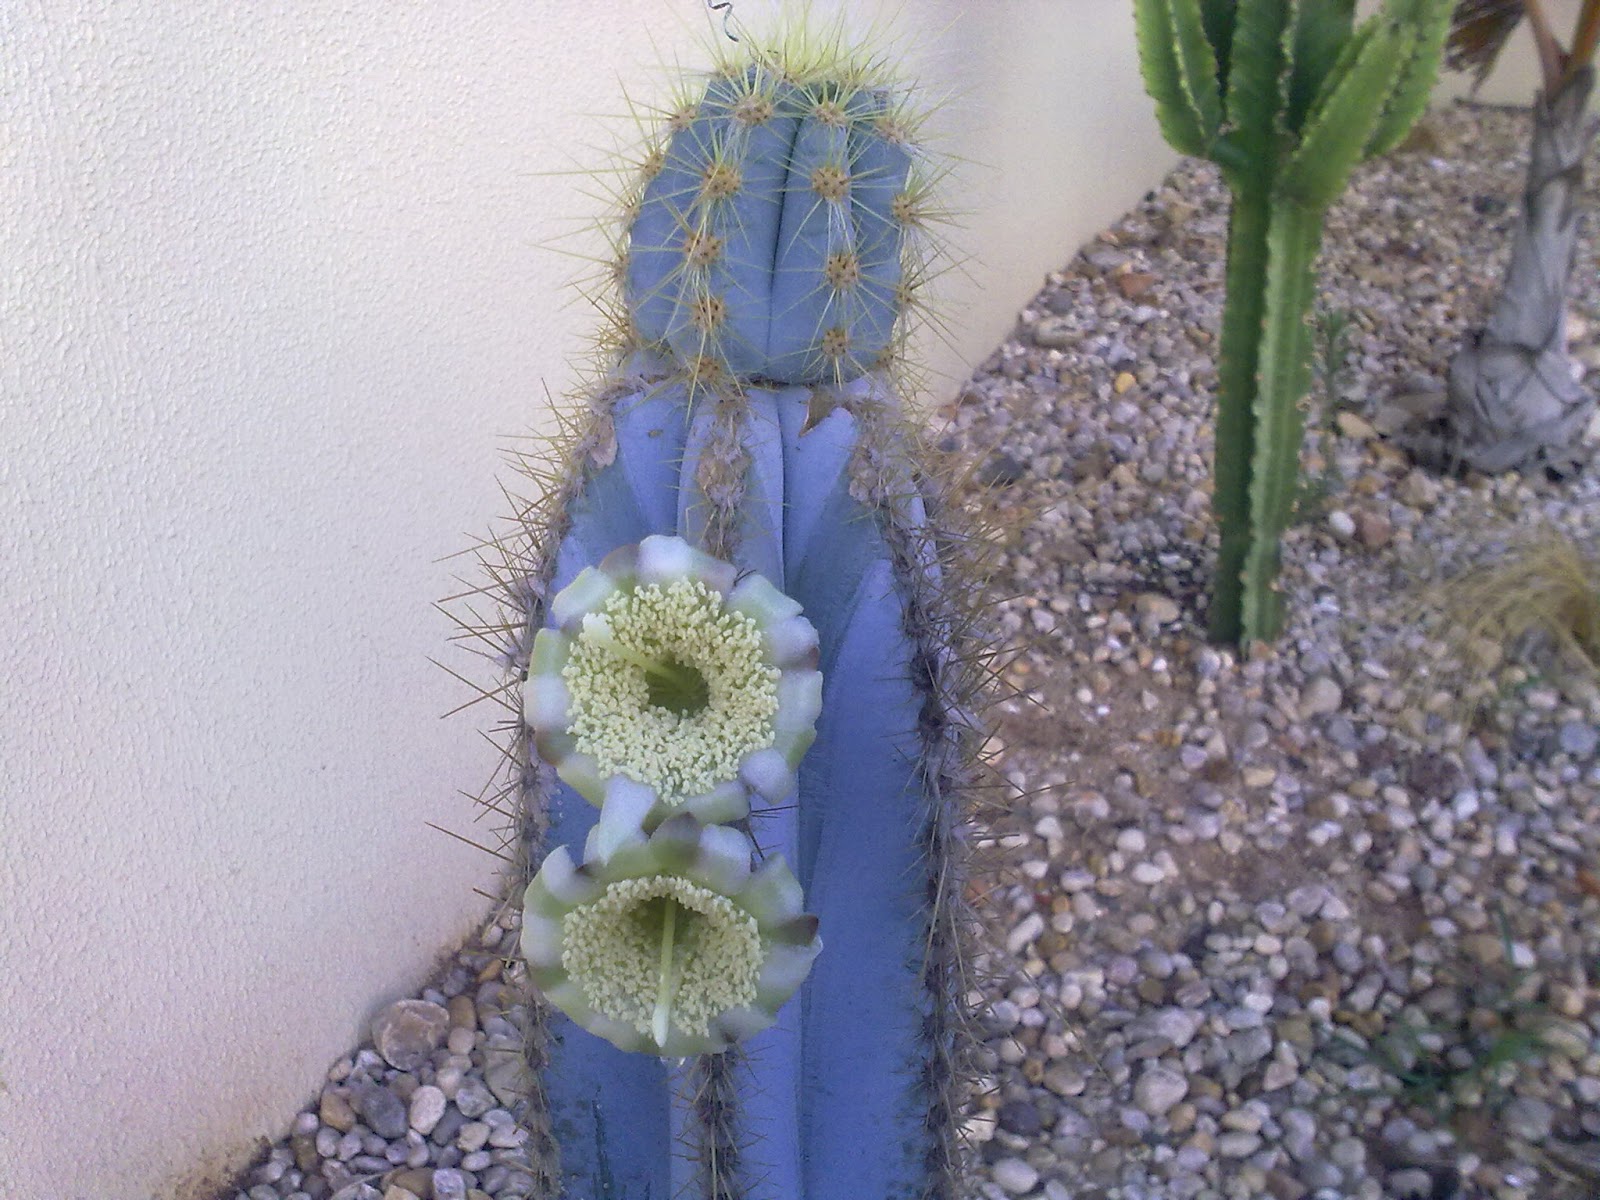 Características e cultivo do Cacto-azul (Pilosocereus pachycladus) -  PlantaSonya - O seu blog sobre cultivo de plantas e flores